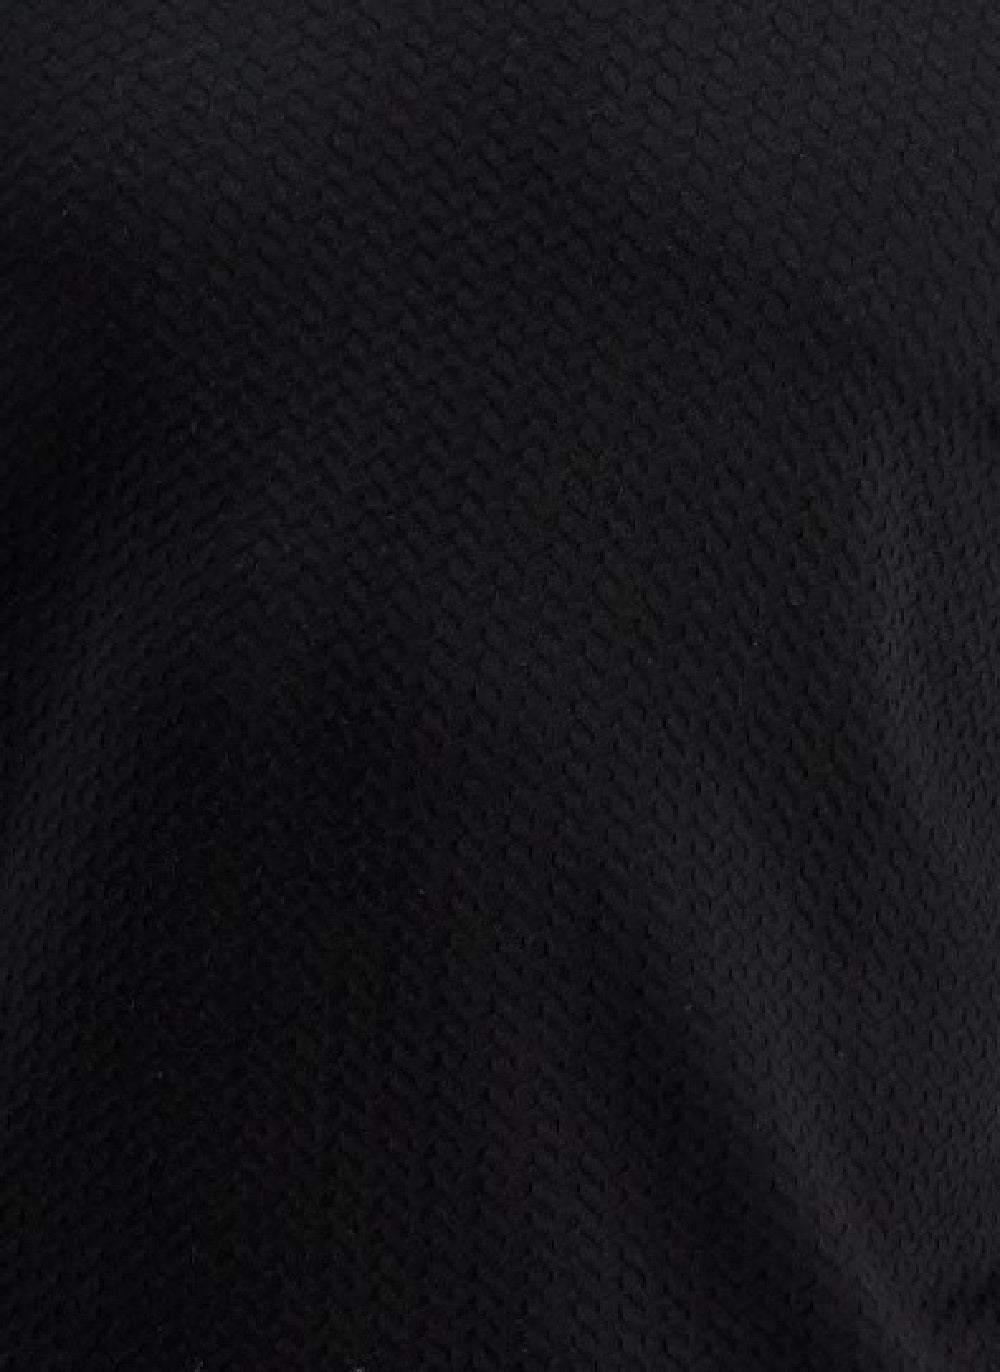 Tasso Elba Men's Crossover Textured Sweater Black Size 2 Extra Large